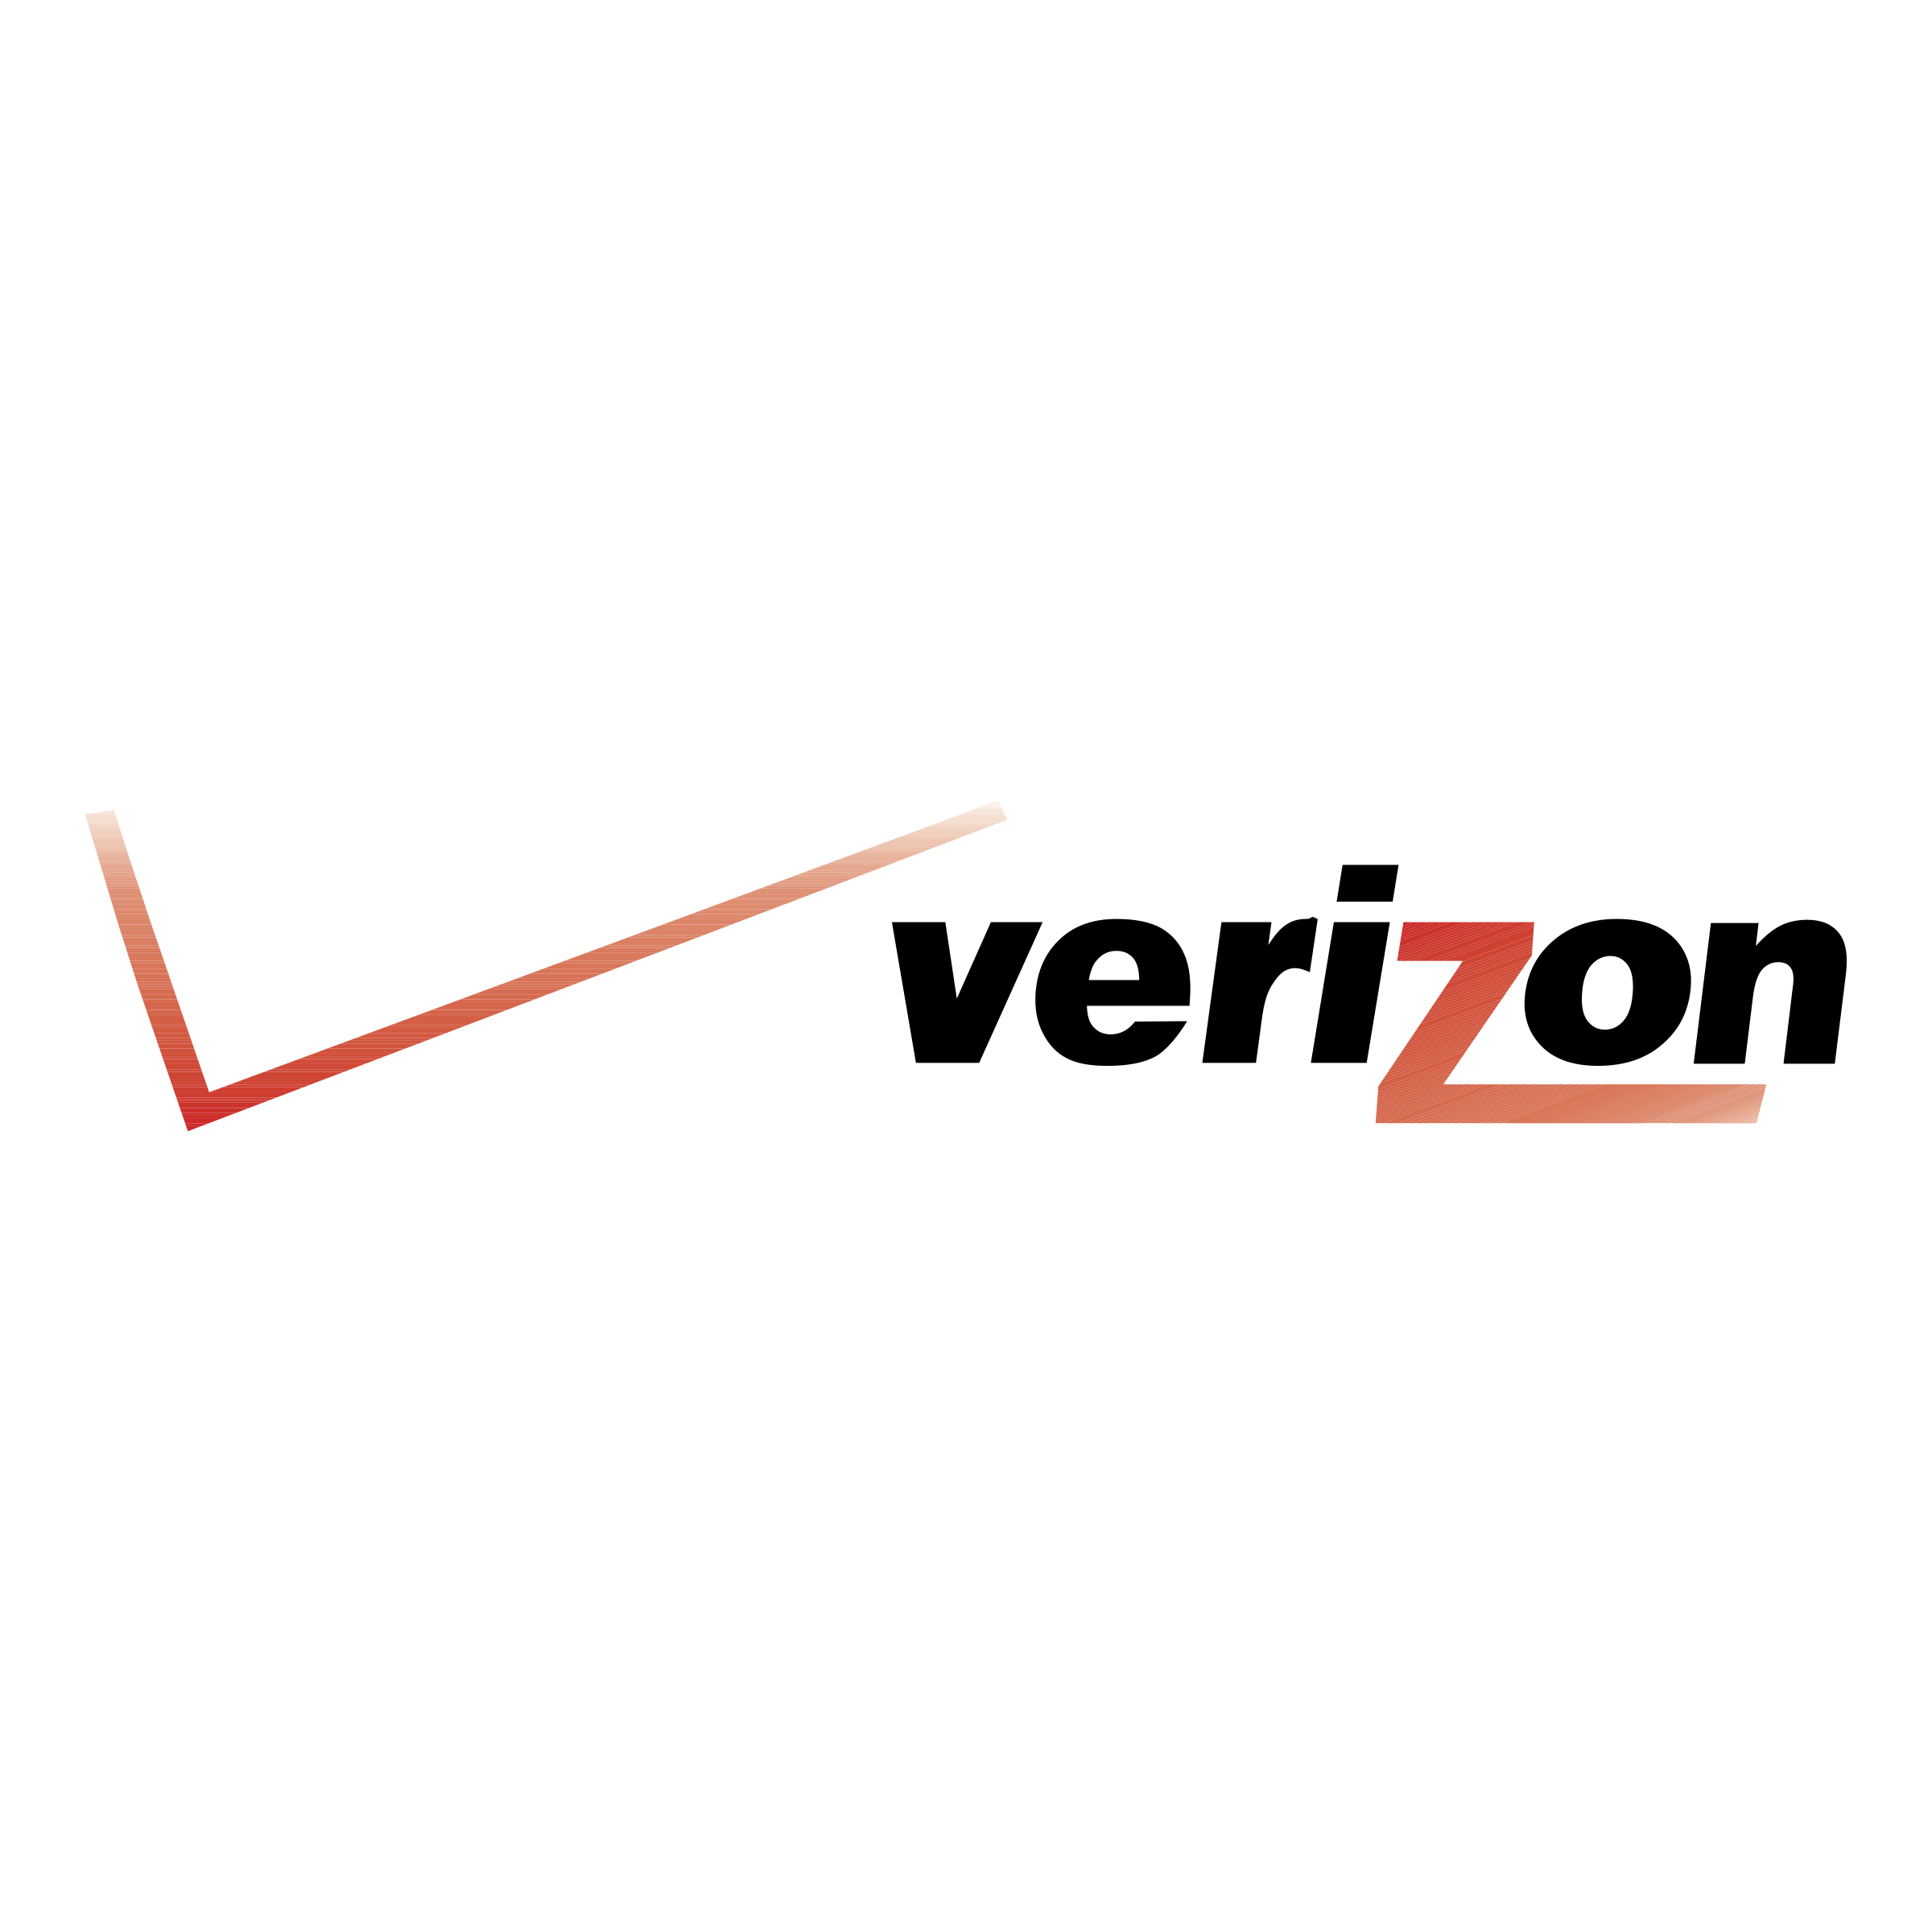 Google Verizon Logo - Verizon Logo PNG Transparent & SVG Vector - Freebie Supply